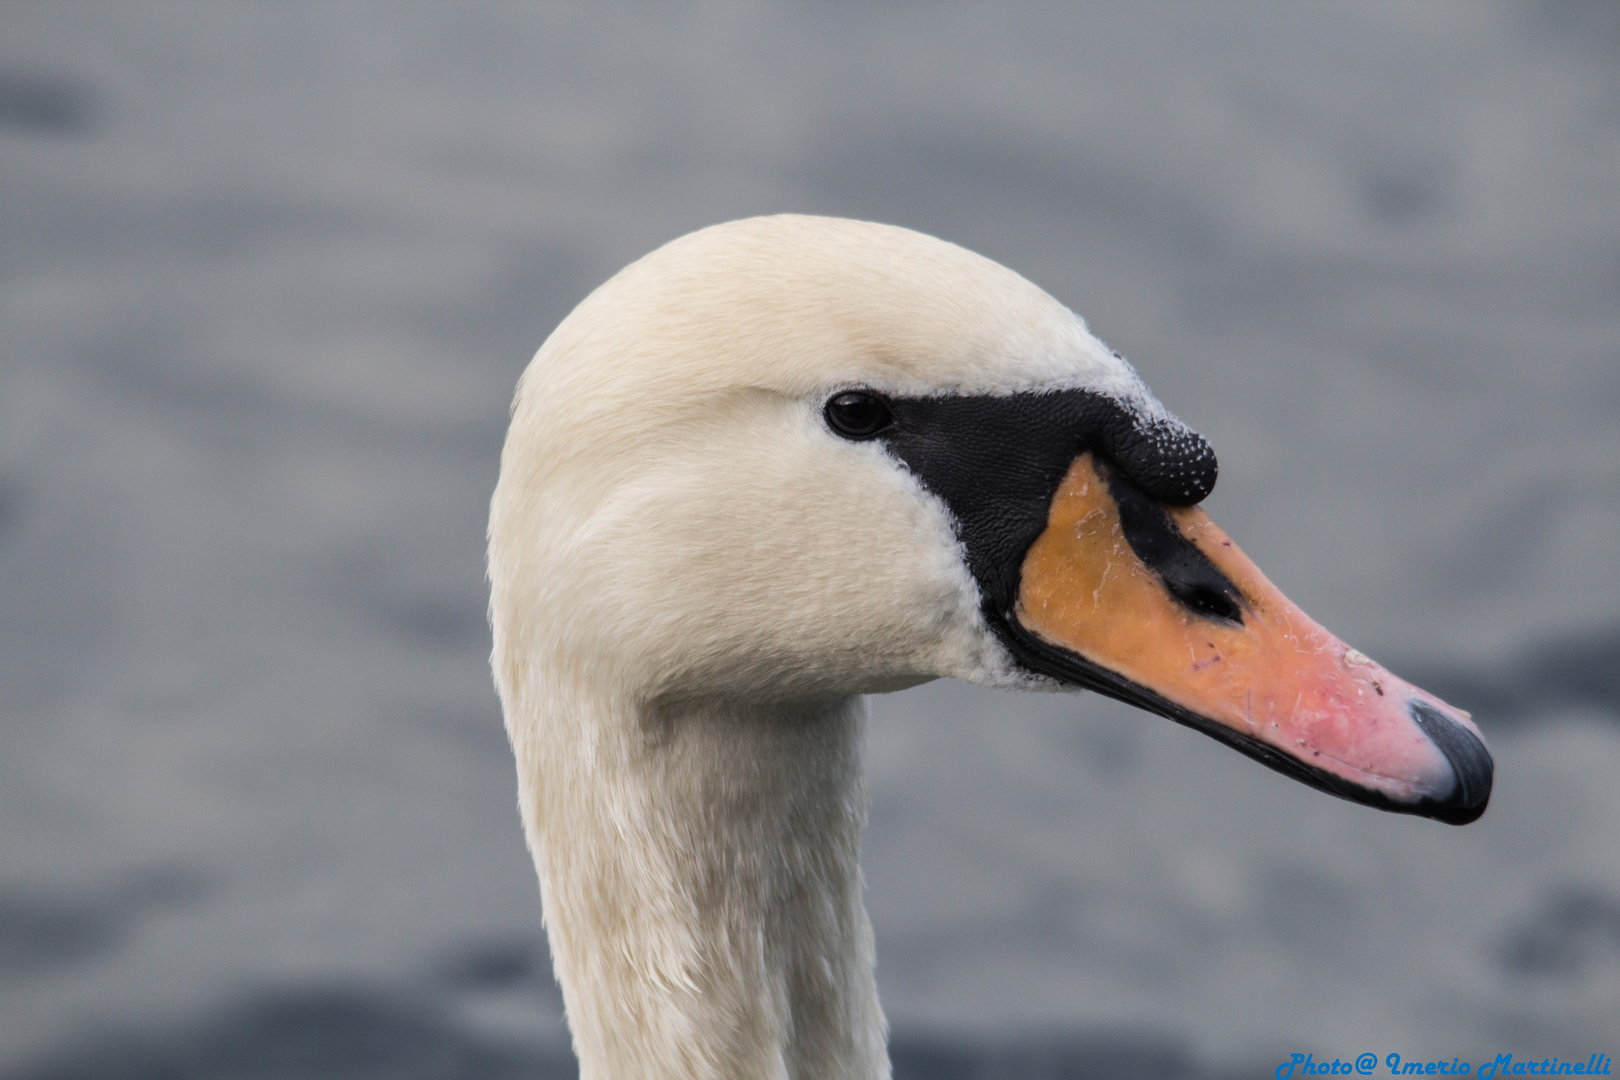 Depicting a beautiful swan